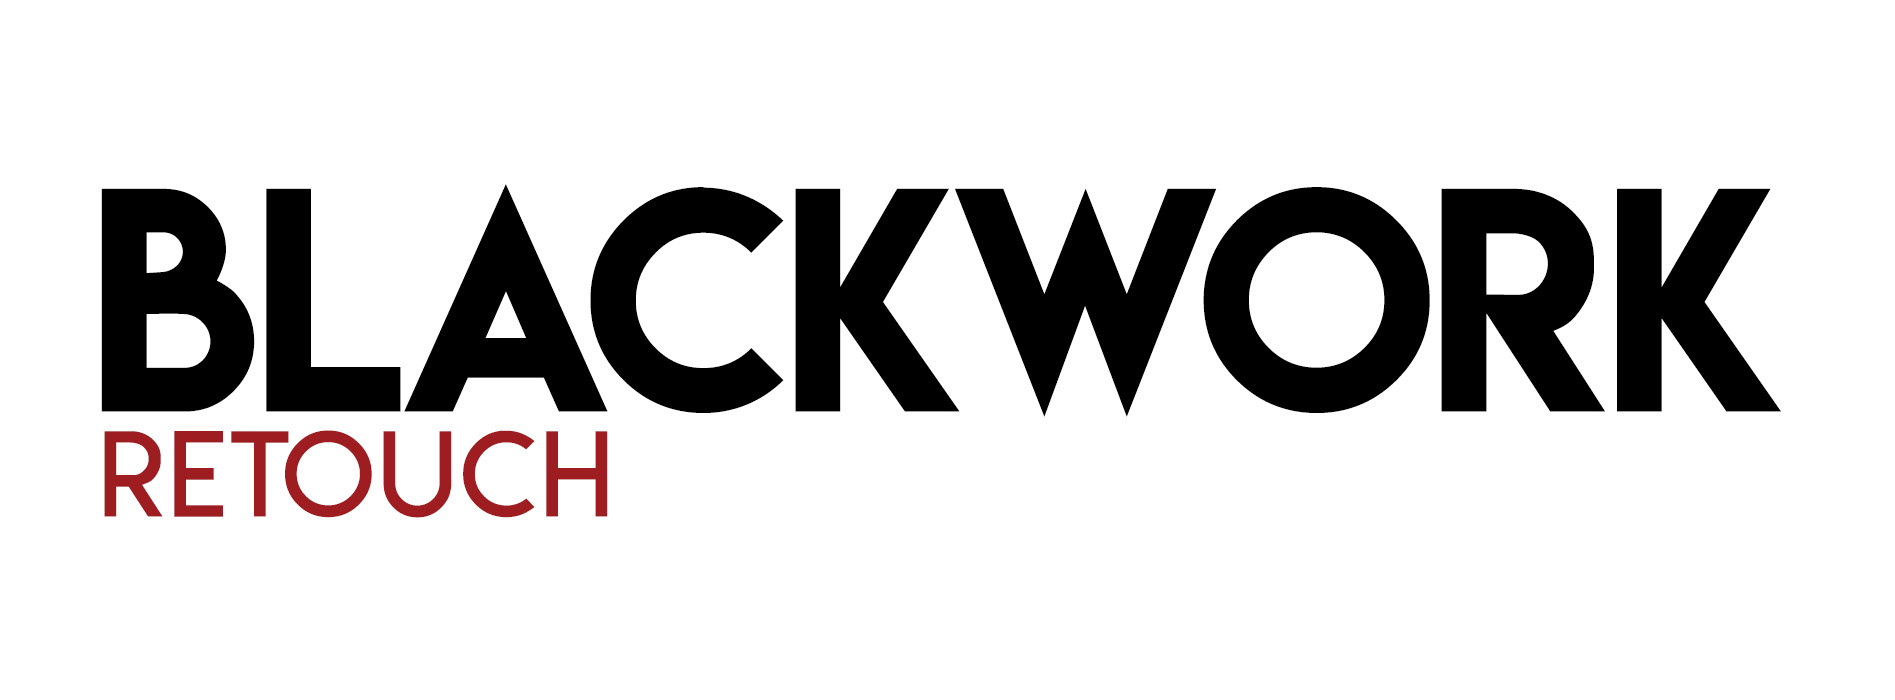 BlackworK